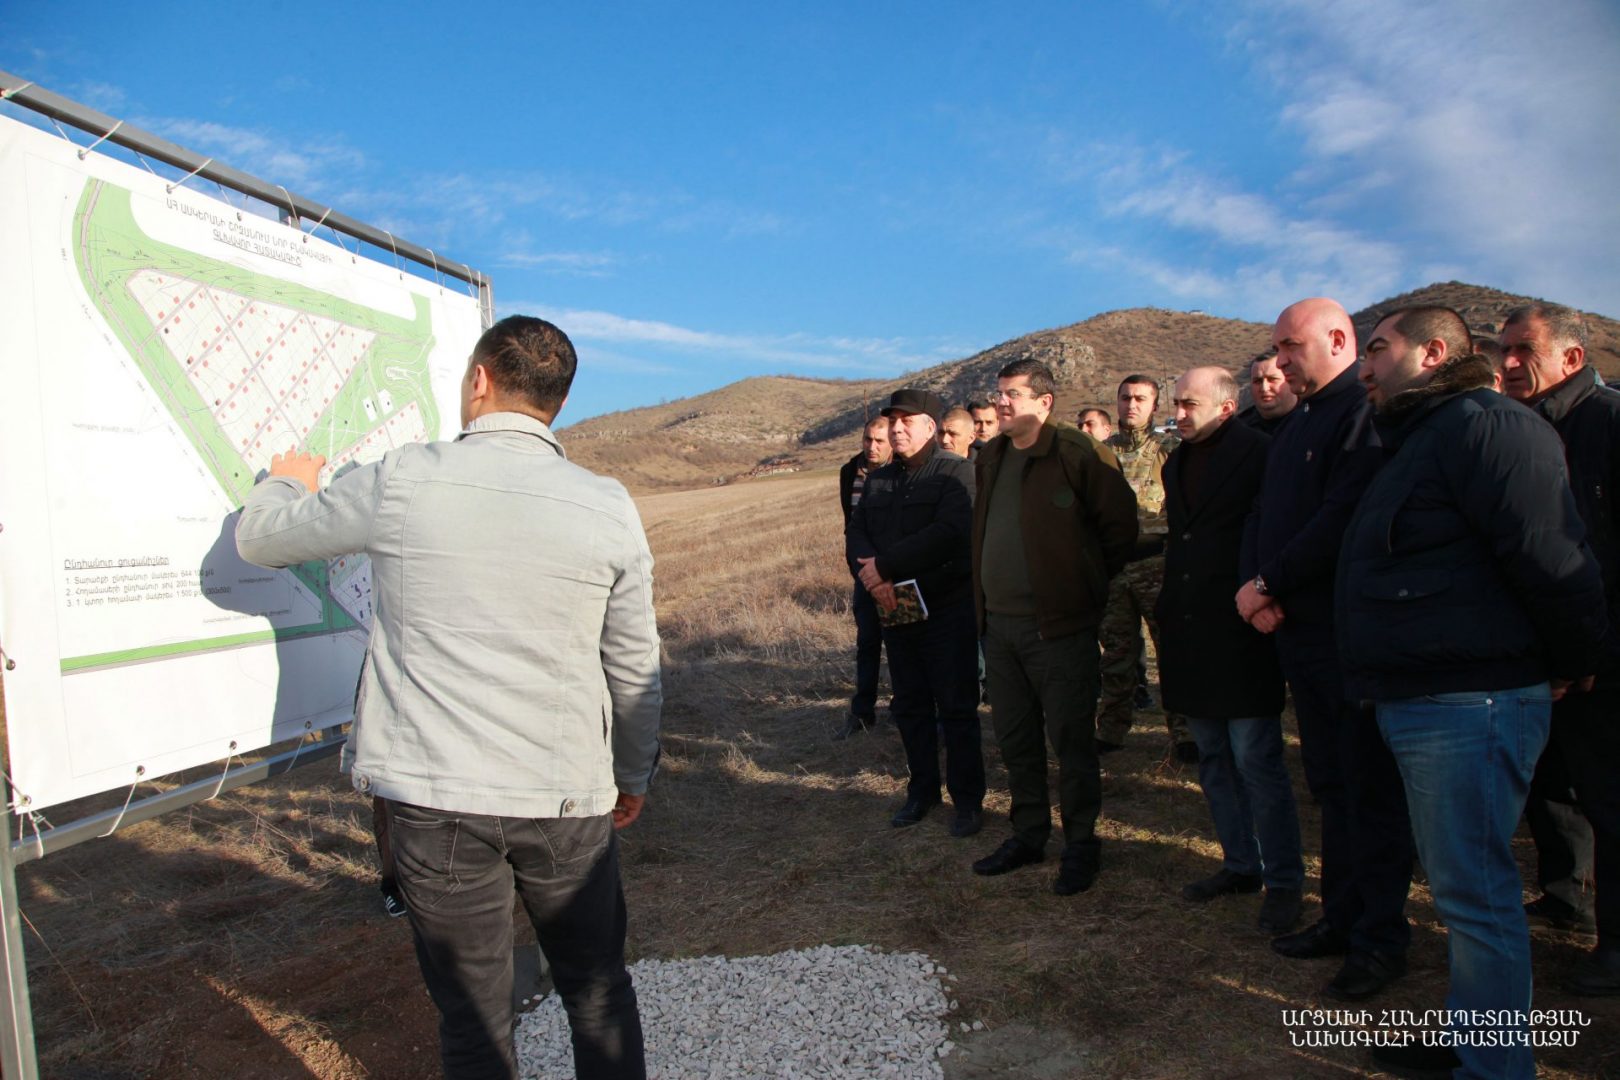 New settlement being established in Artsakh’s Askeran region - The US Armenians